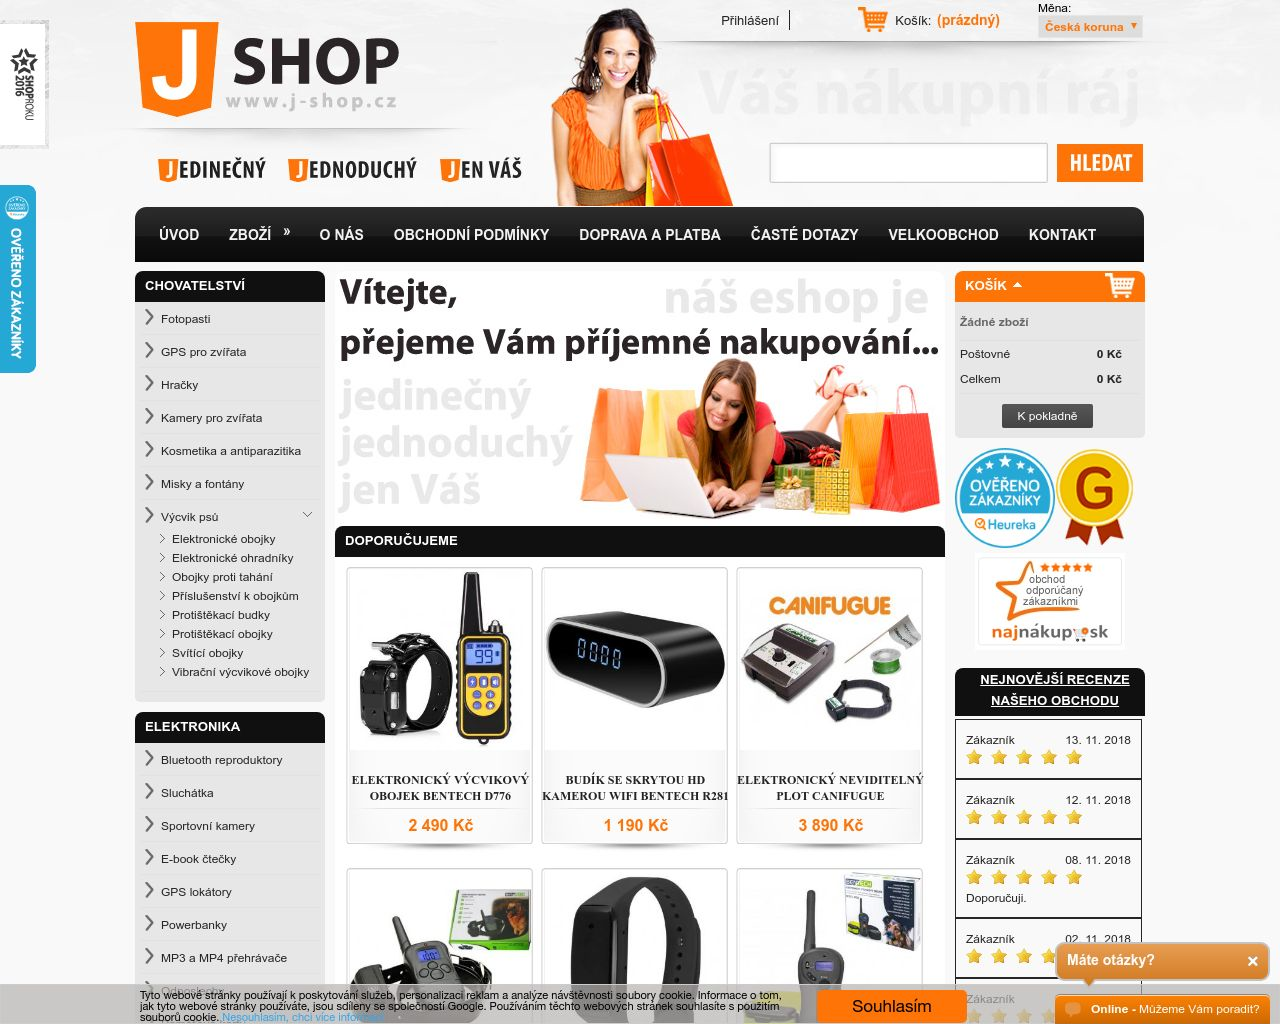 Site Image j-shop.cz v 1280x1024